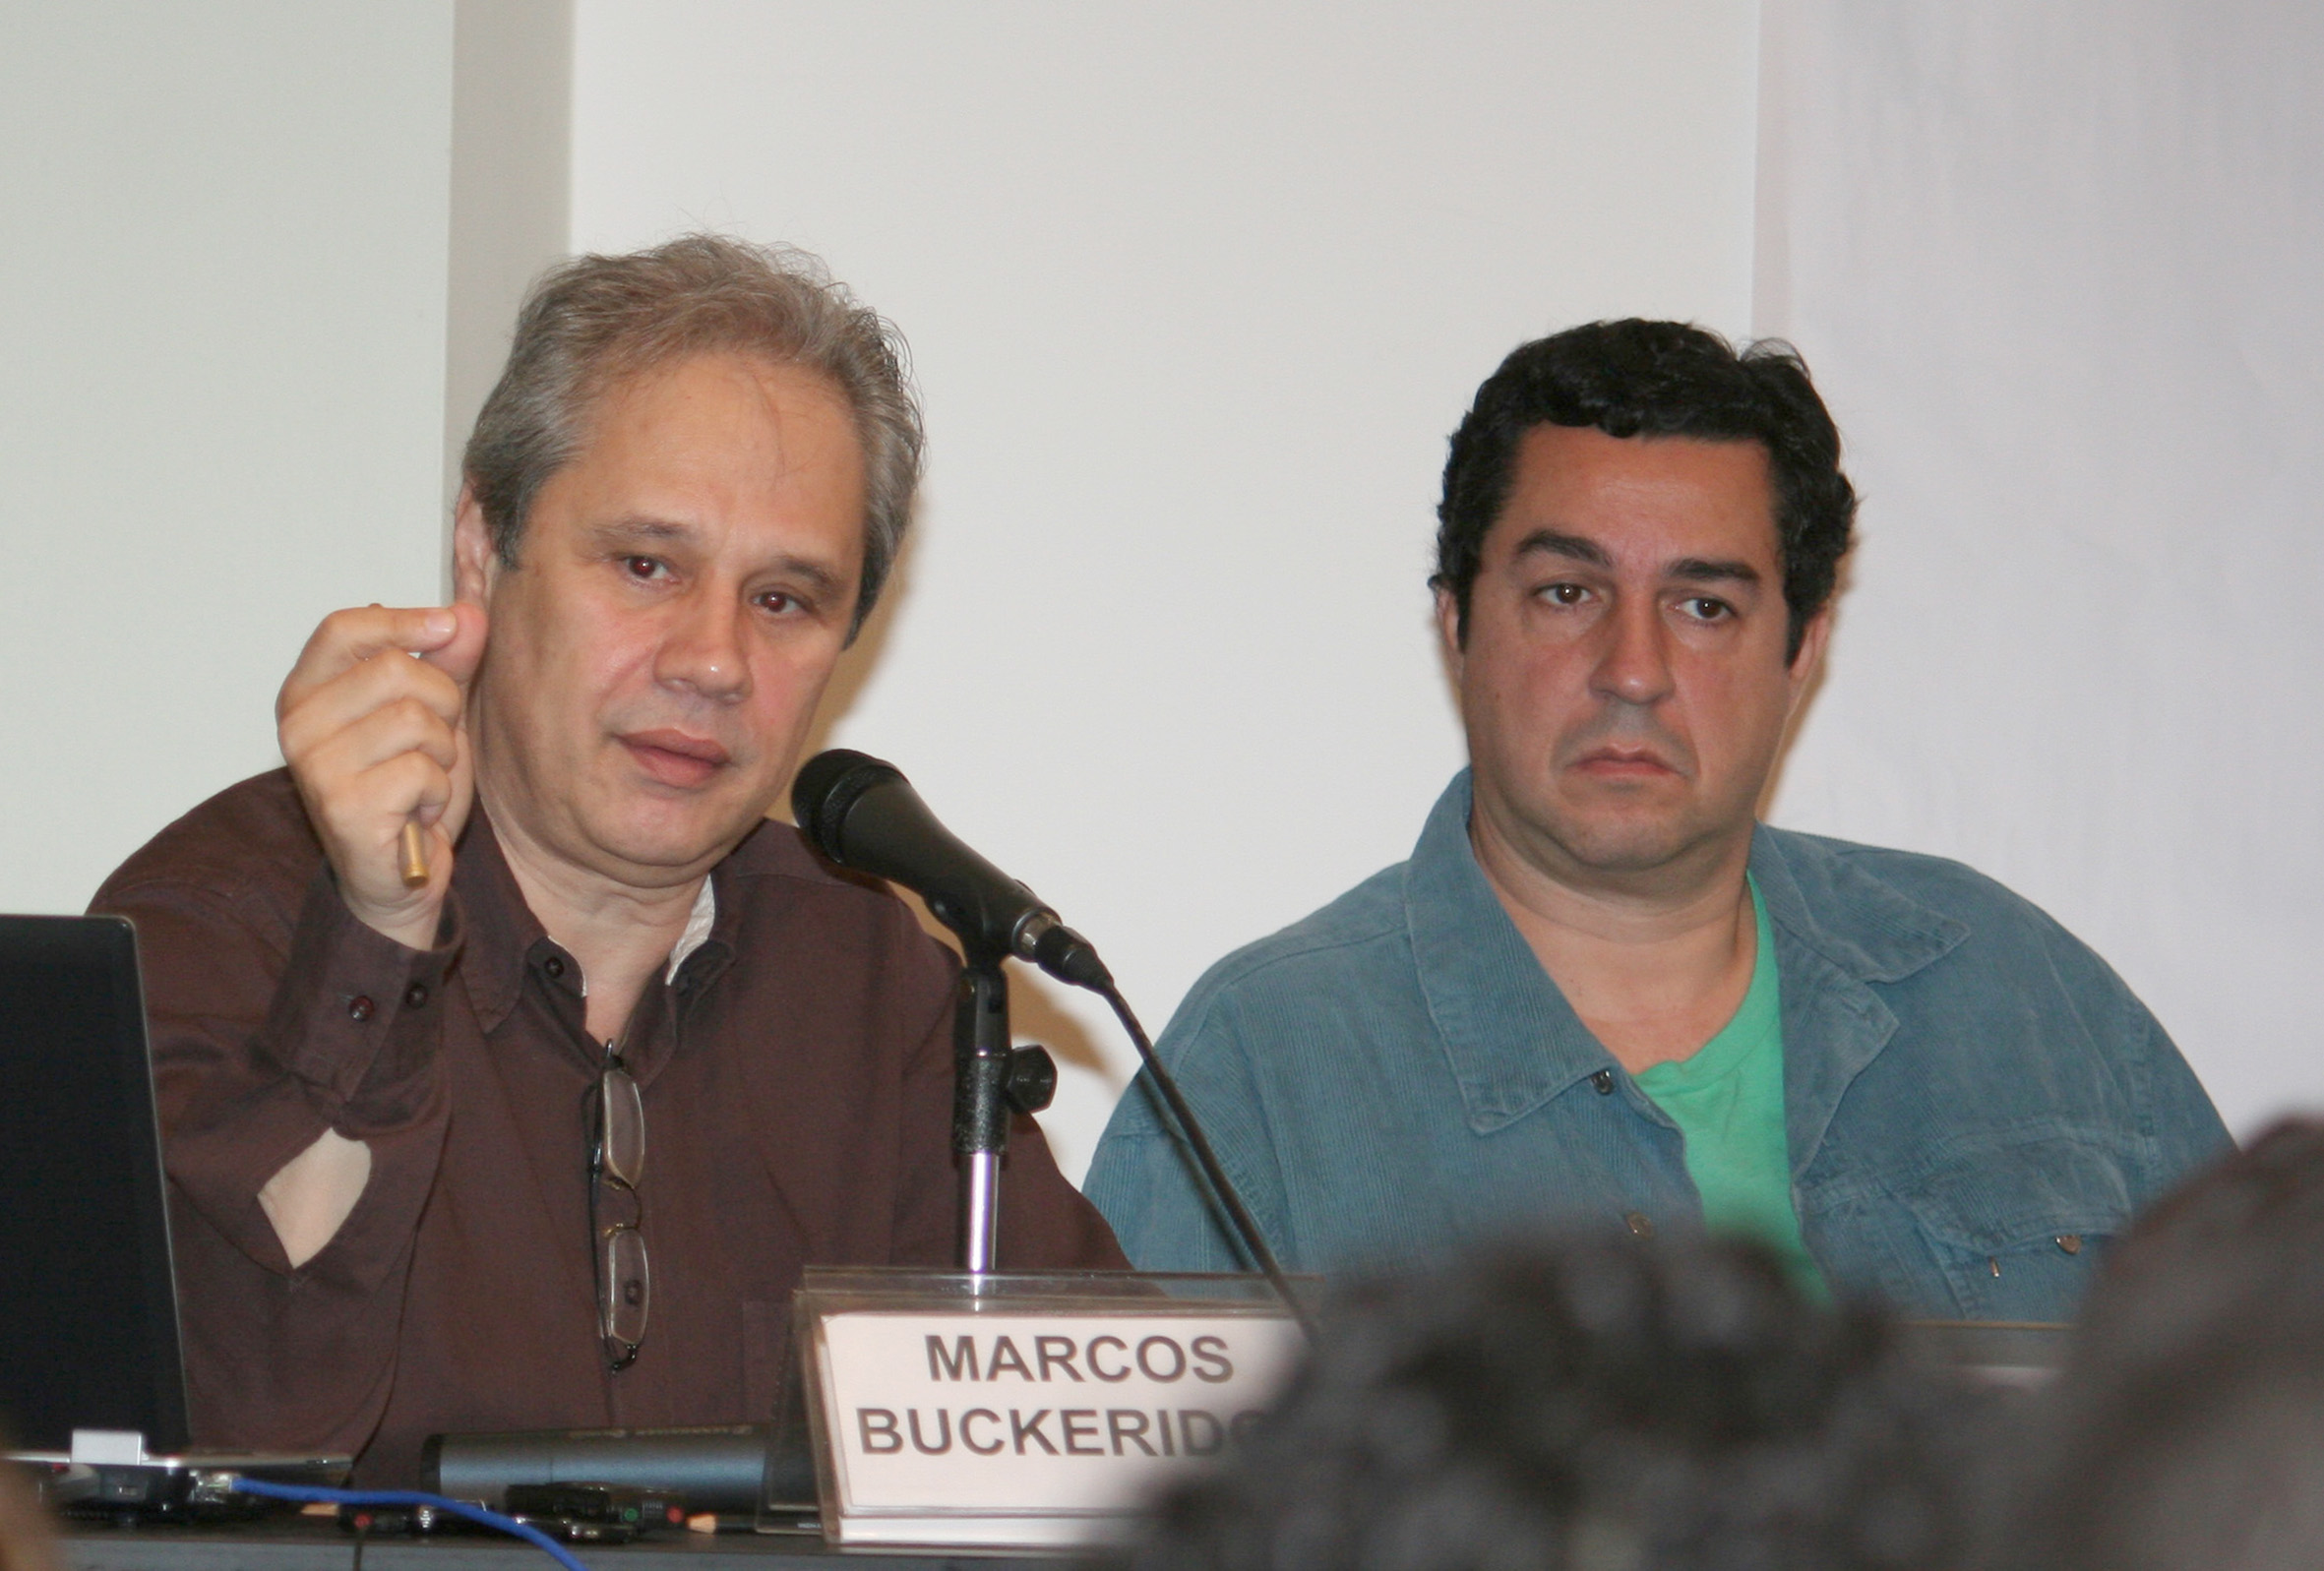 Marcos Silveira Buckeridge e Pedro Ortiz